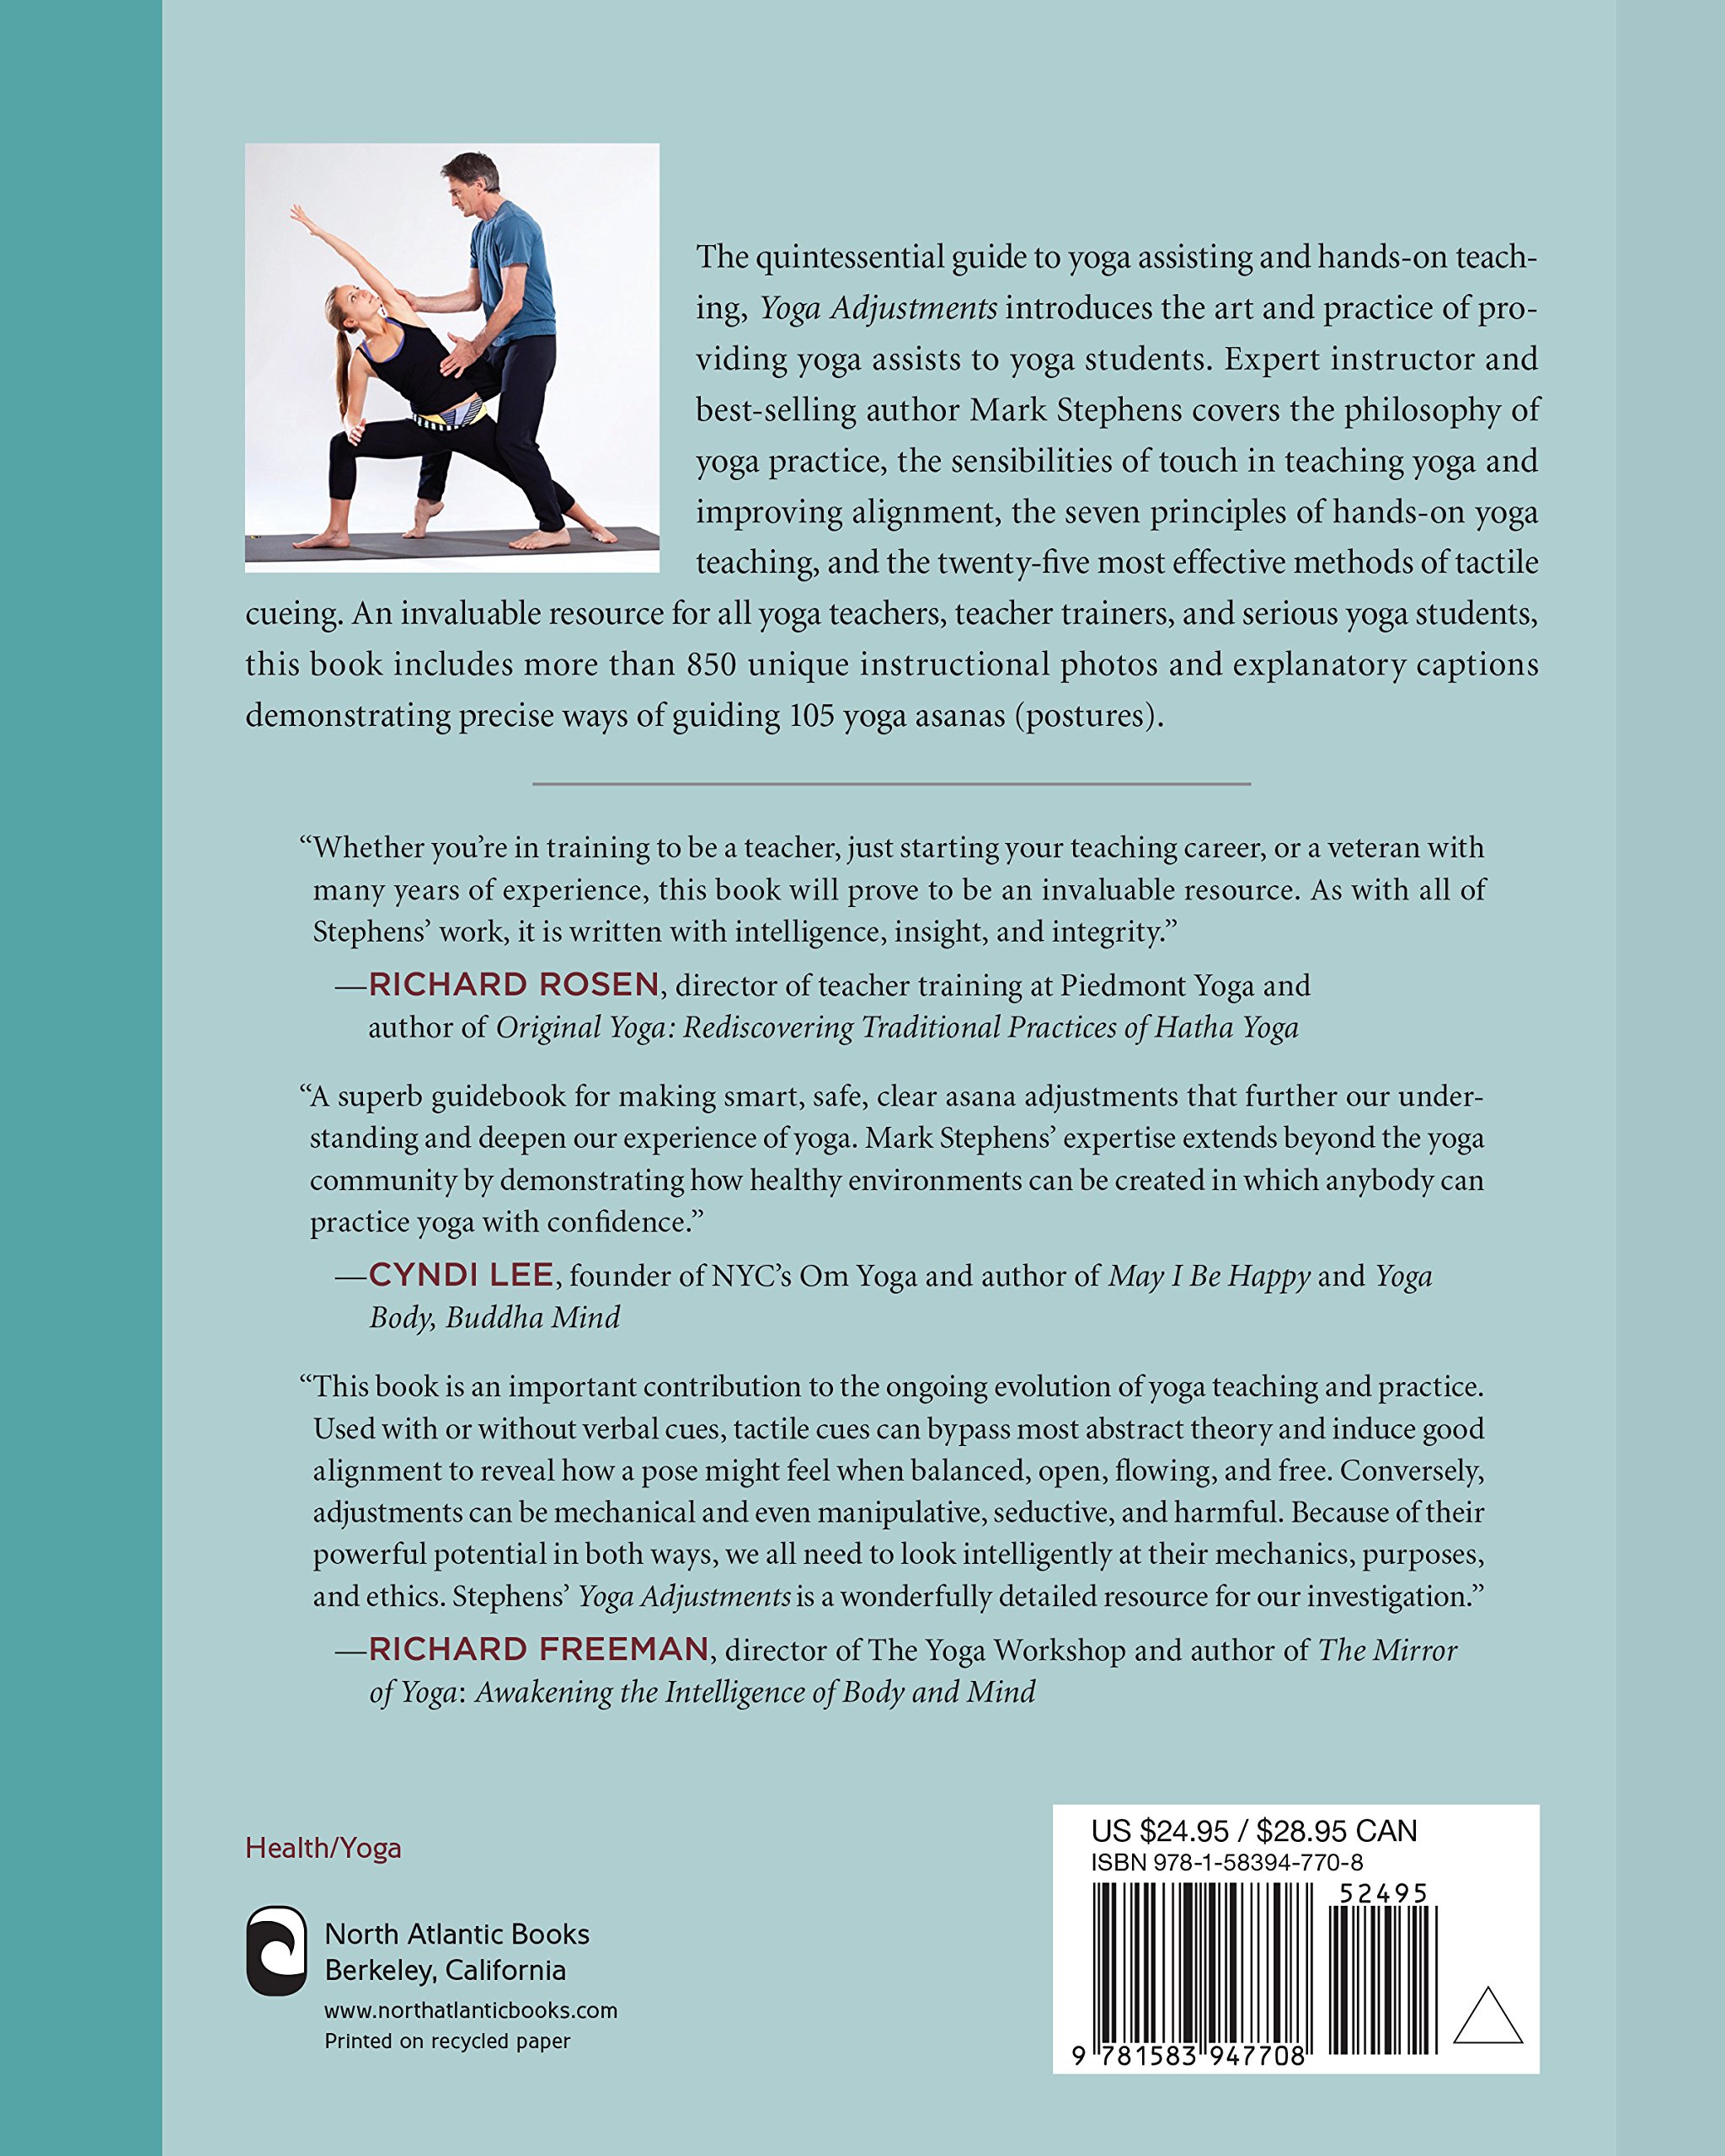 Teaching Yoga by Mark Stephens, Paperback, 9781556438851